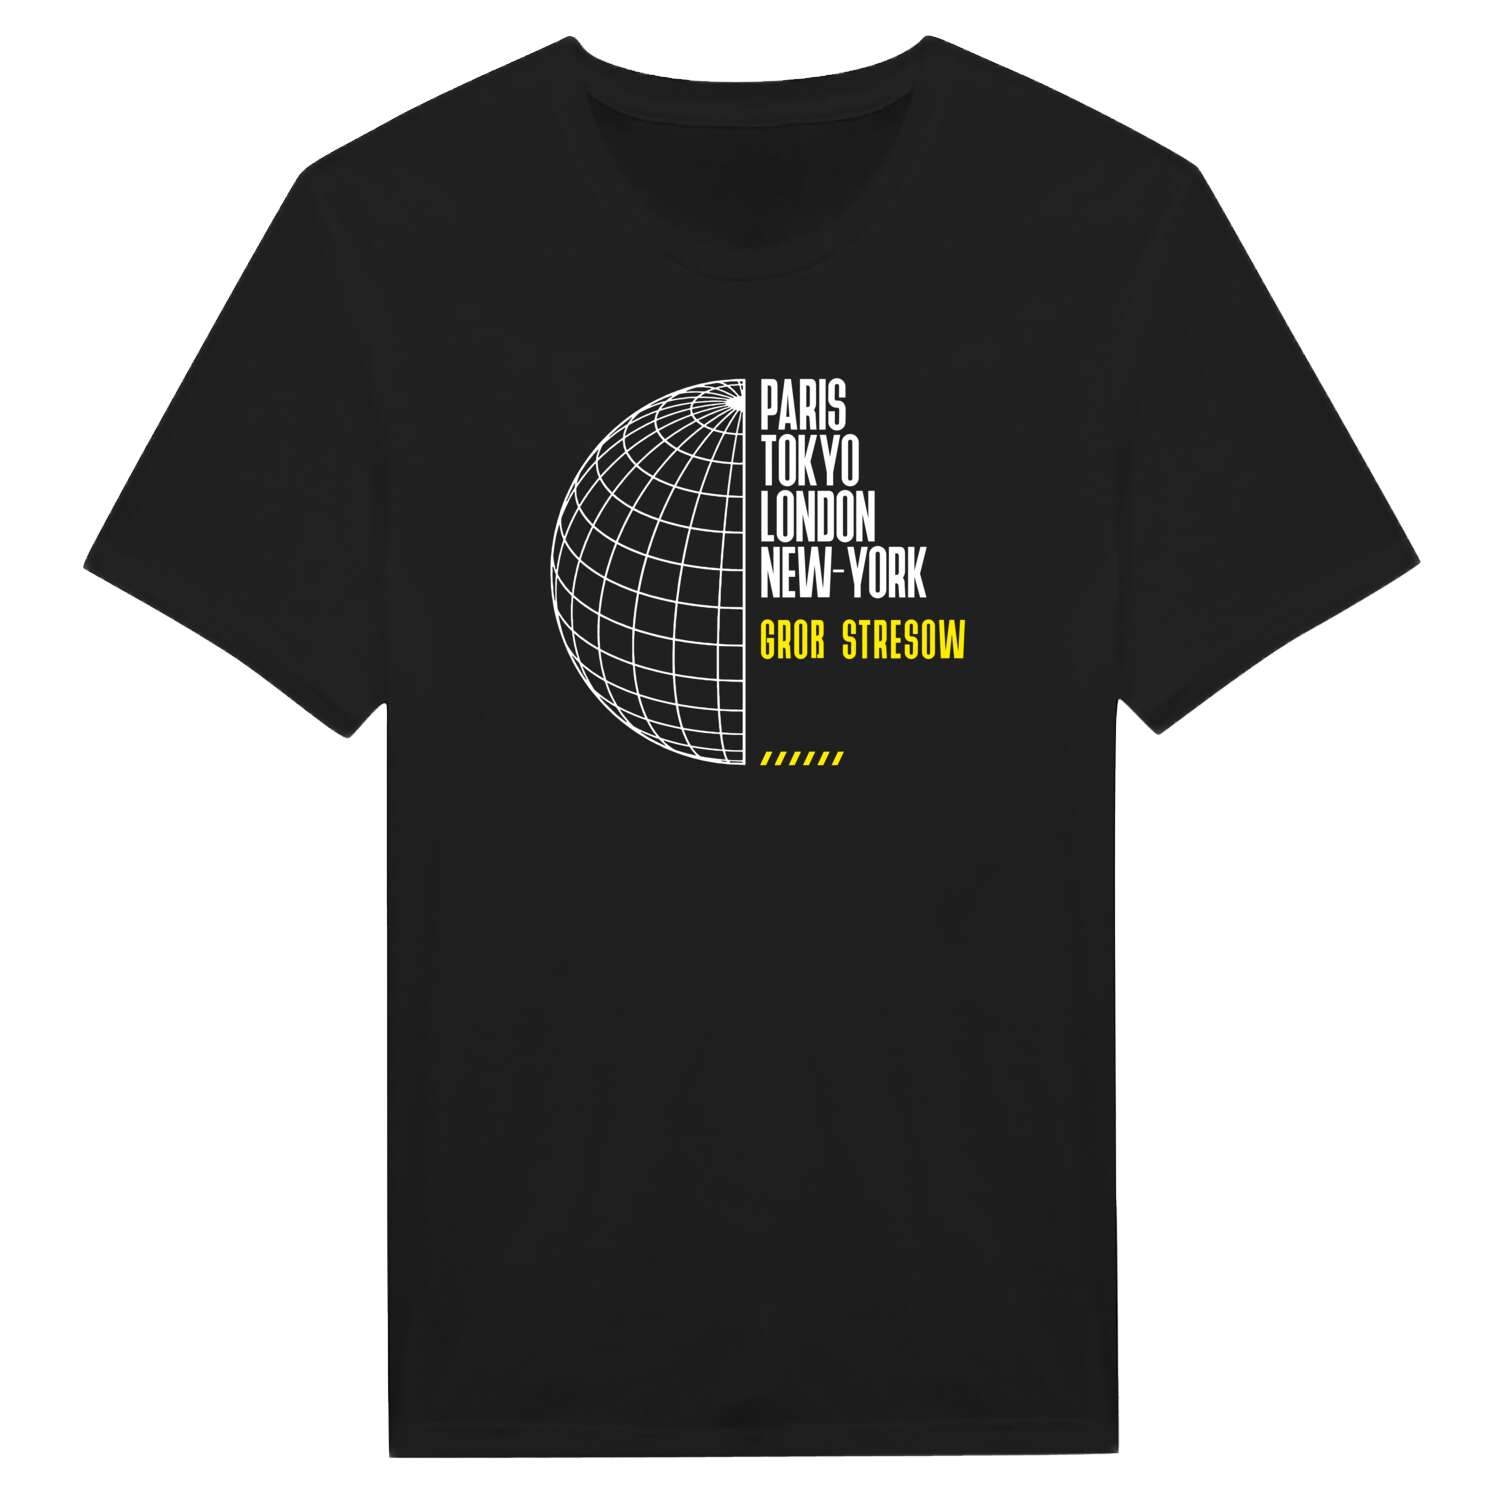 Groß Stresow T-Shirt »Paris Tokyo London«